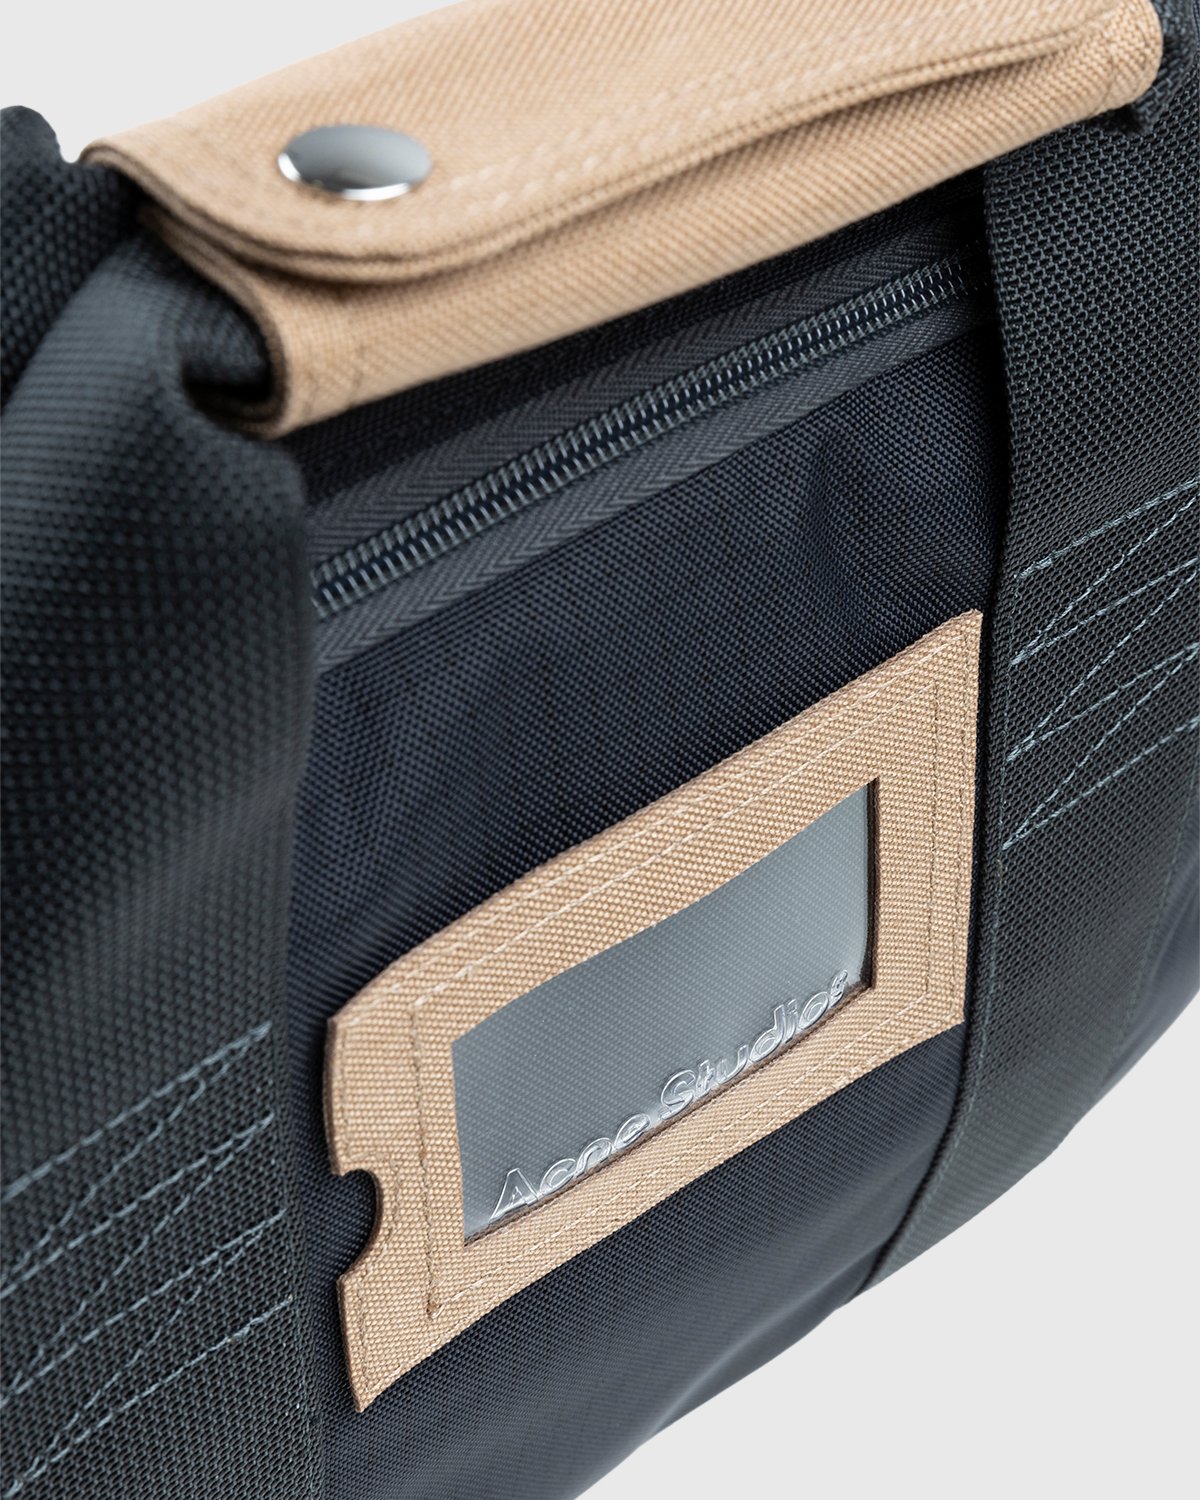 Acne Studios - Nylon Crossbody Laptop Bag Black/Khaki Green - Accessories - Black - Image 7